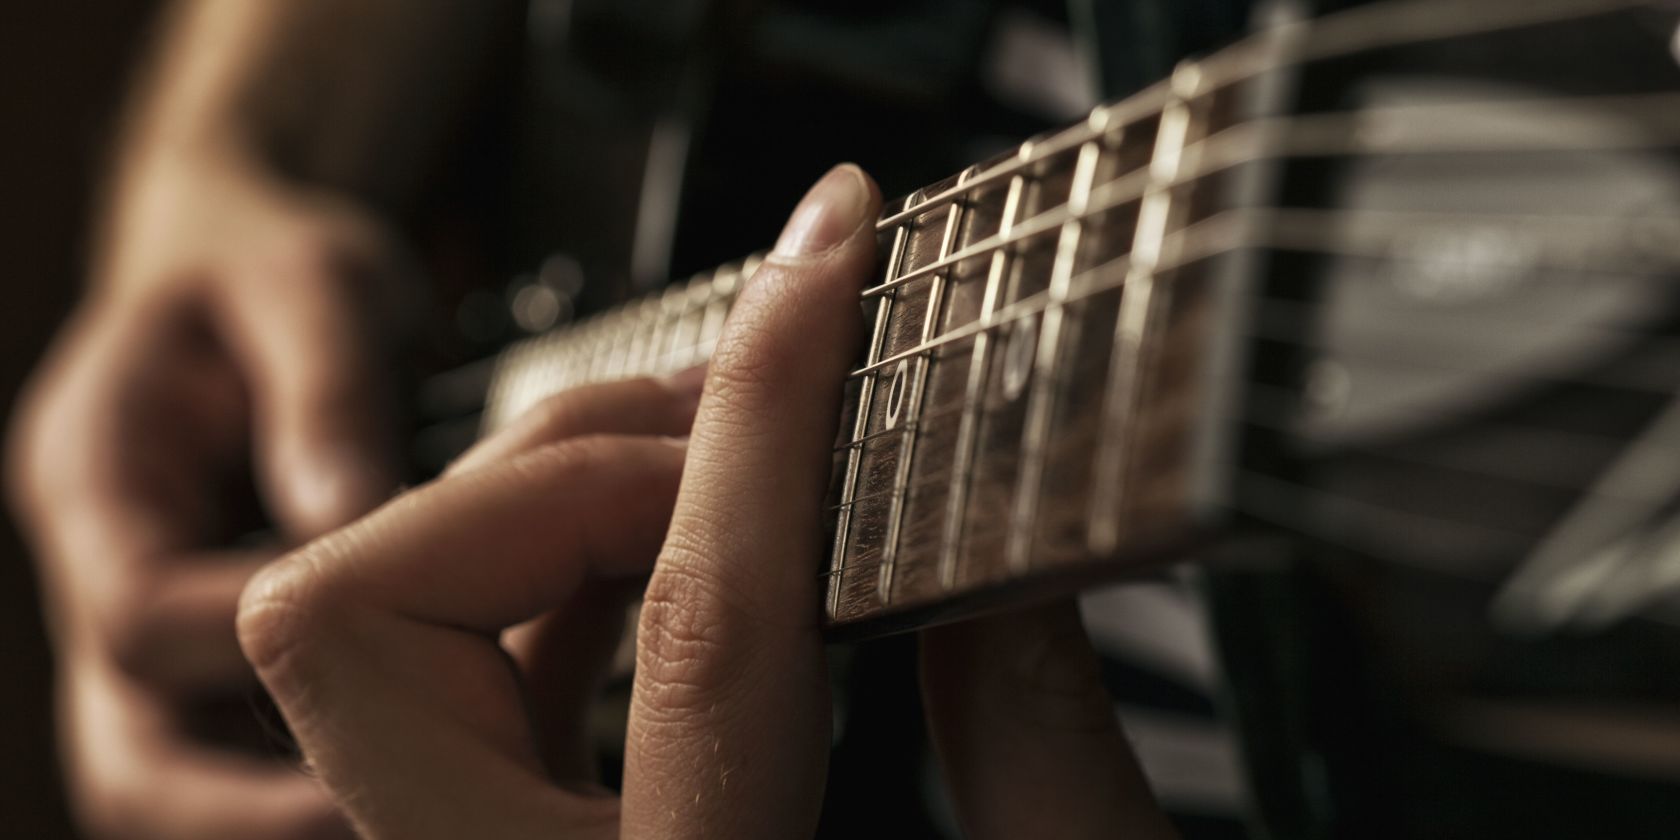 A Hand Holding A Guitar